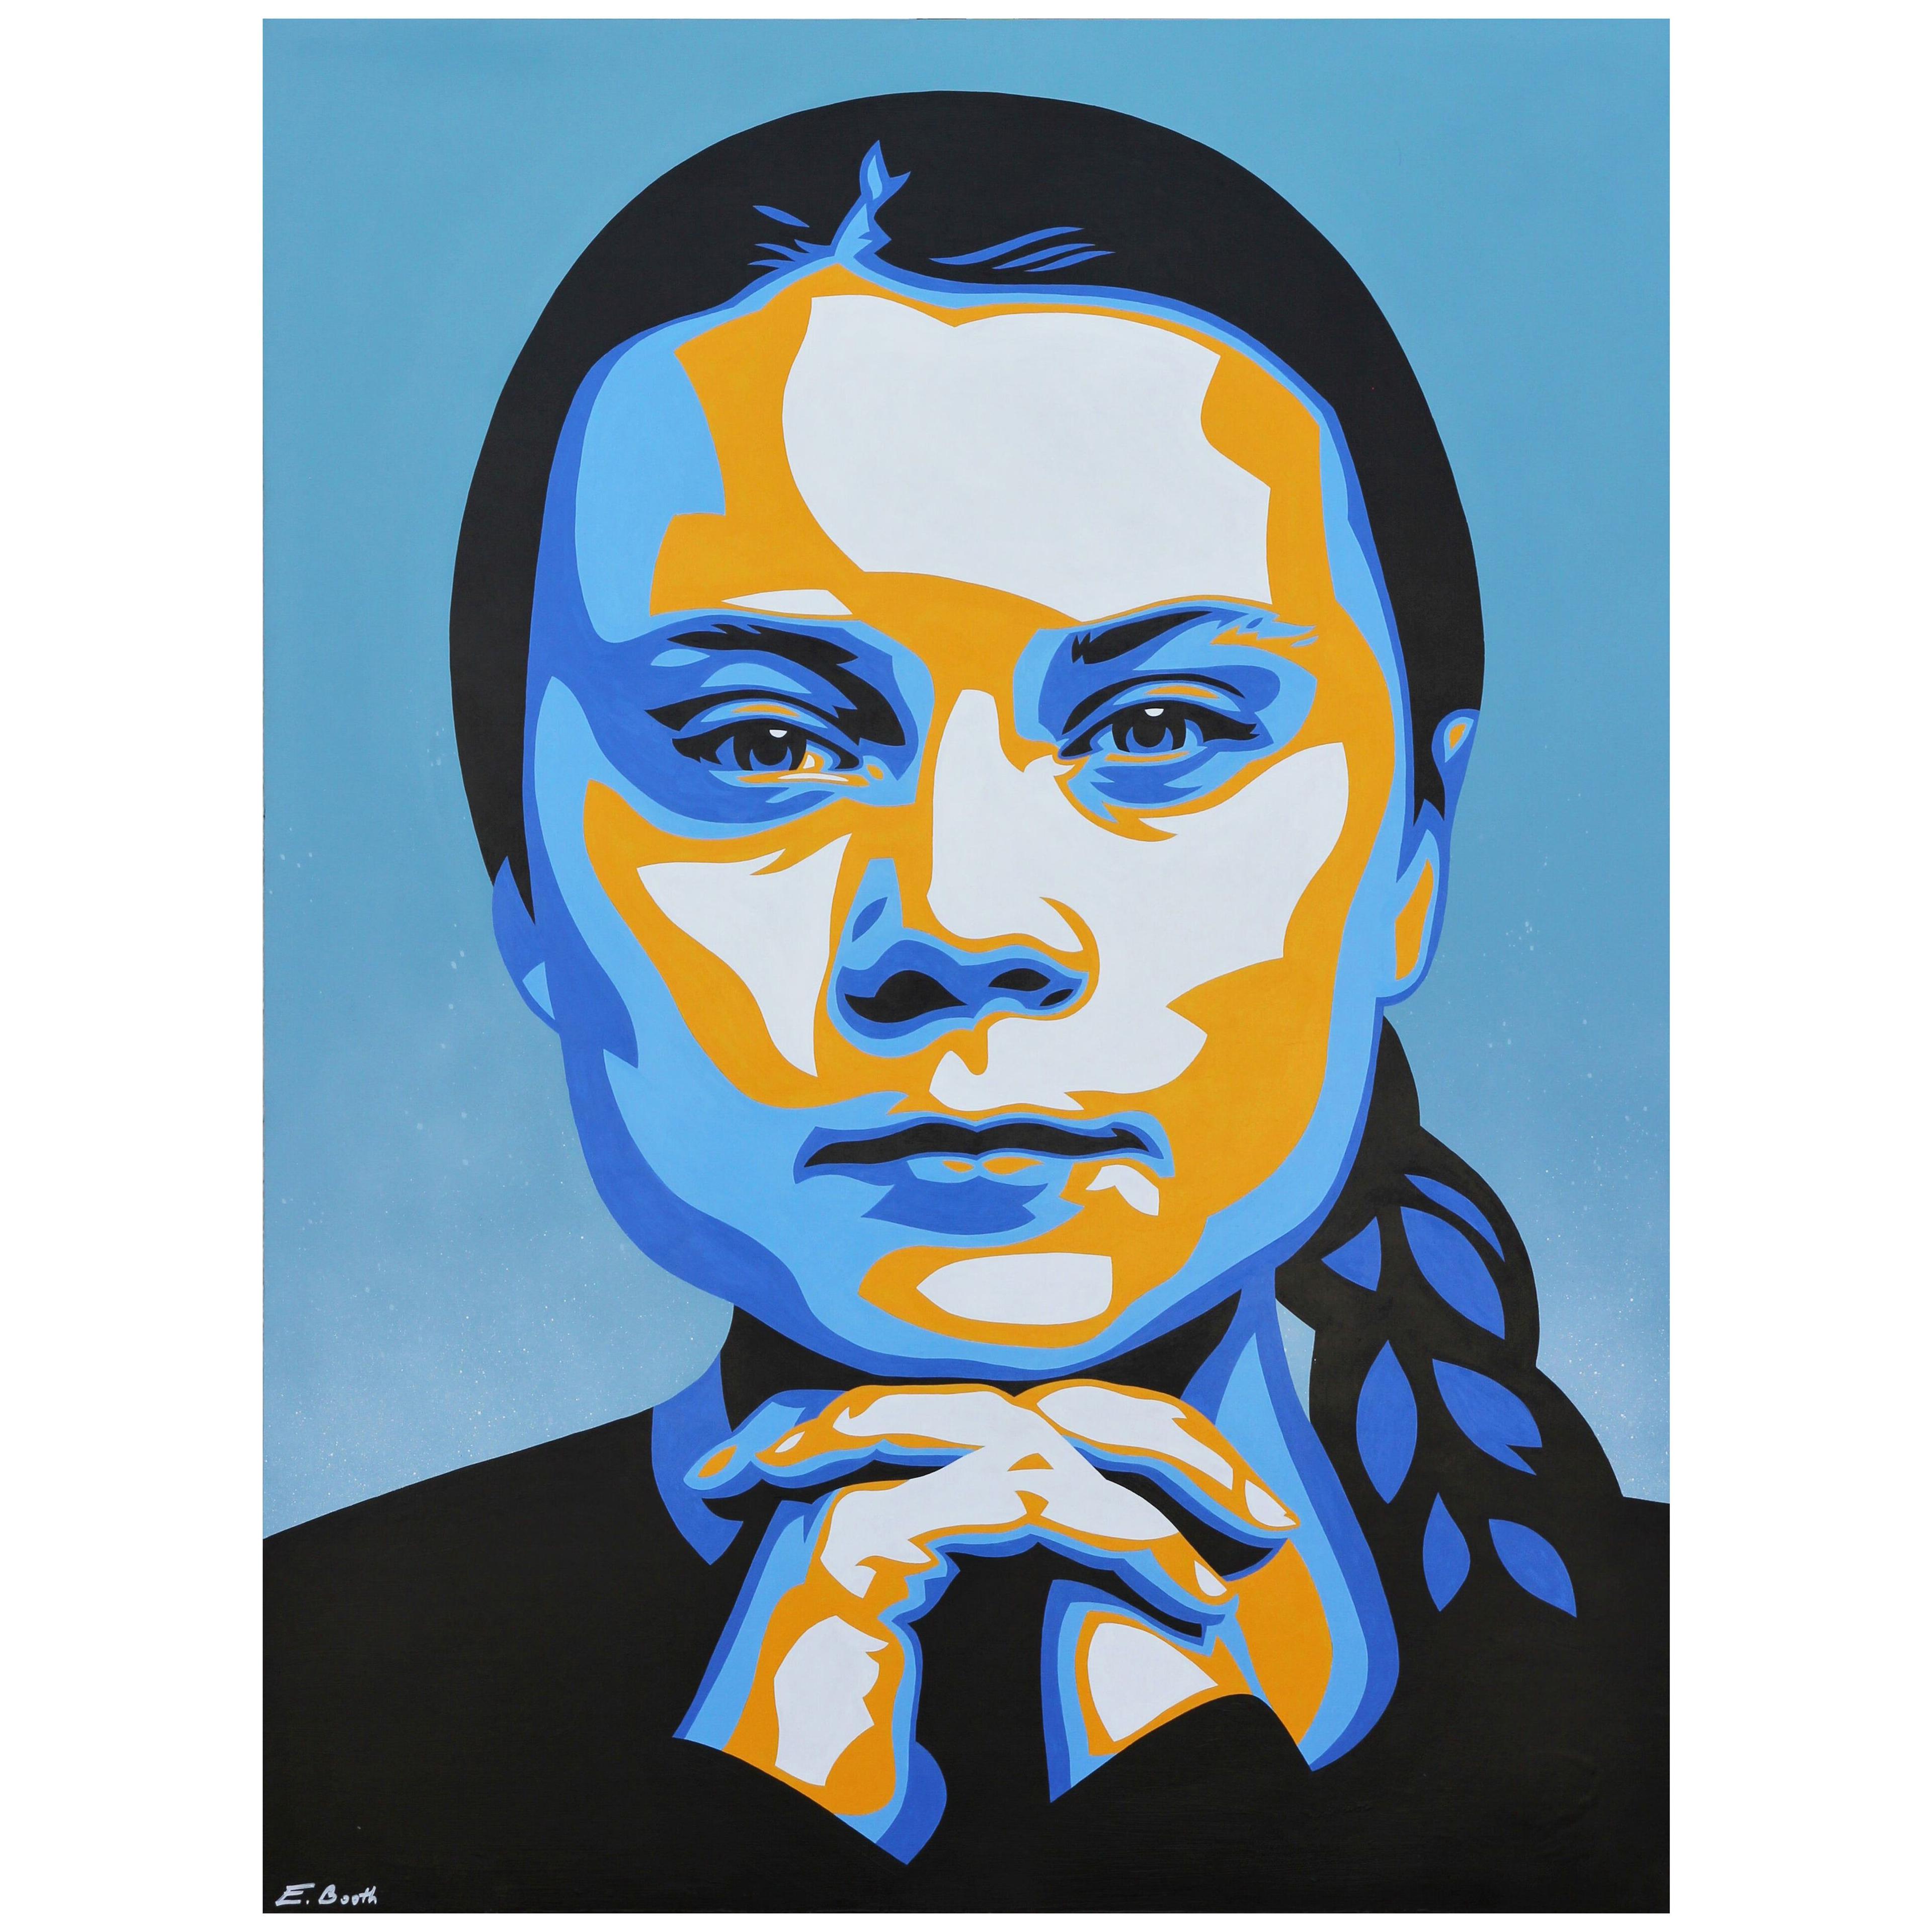 Greta Thunberg “Greta” Blue, Yellow, and Black Abstract Contemporary Portrait	